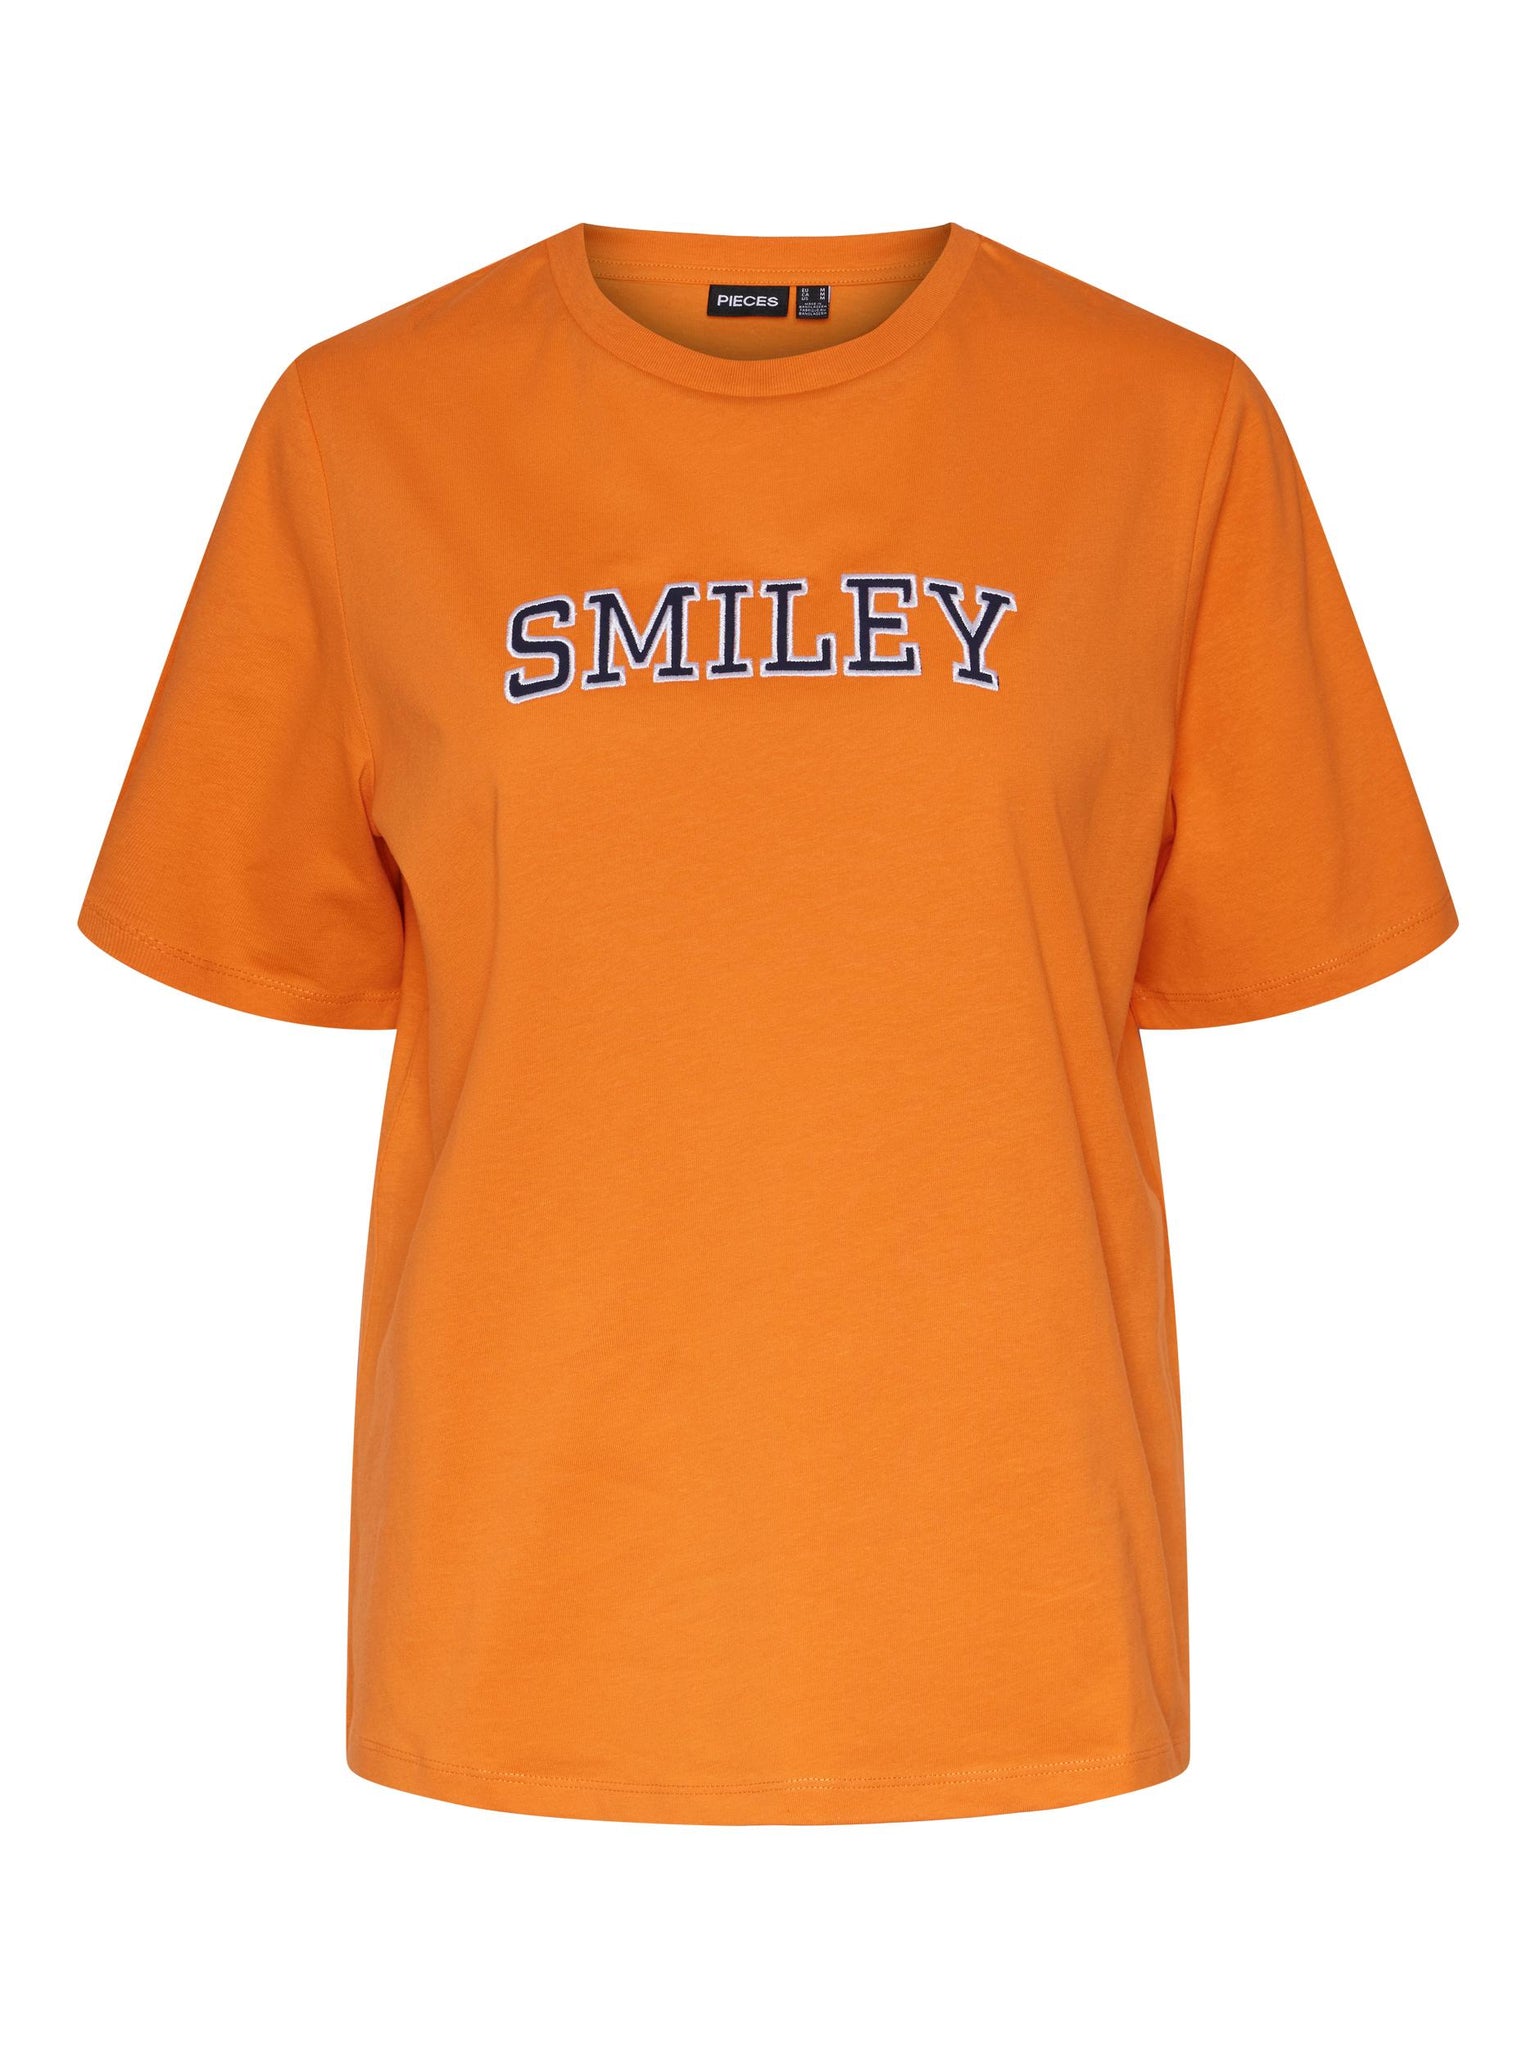 Pieces Smiley Slogan T-Shirt in Orange